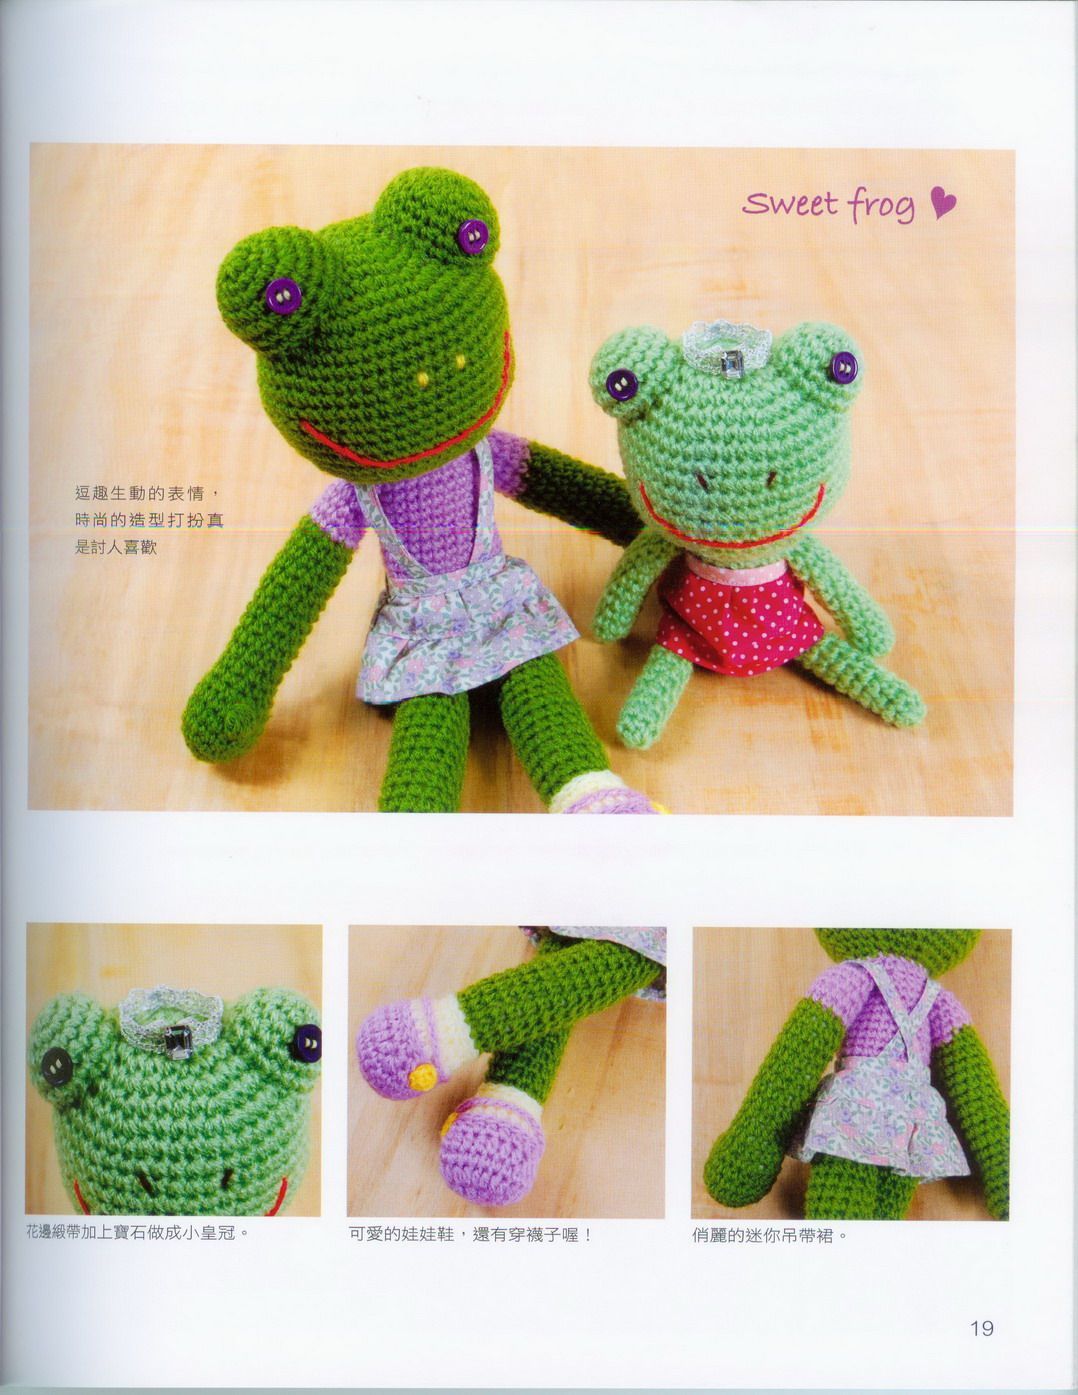 Sweet frog amigurumi pattern (1)